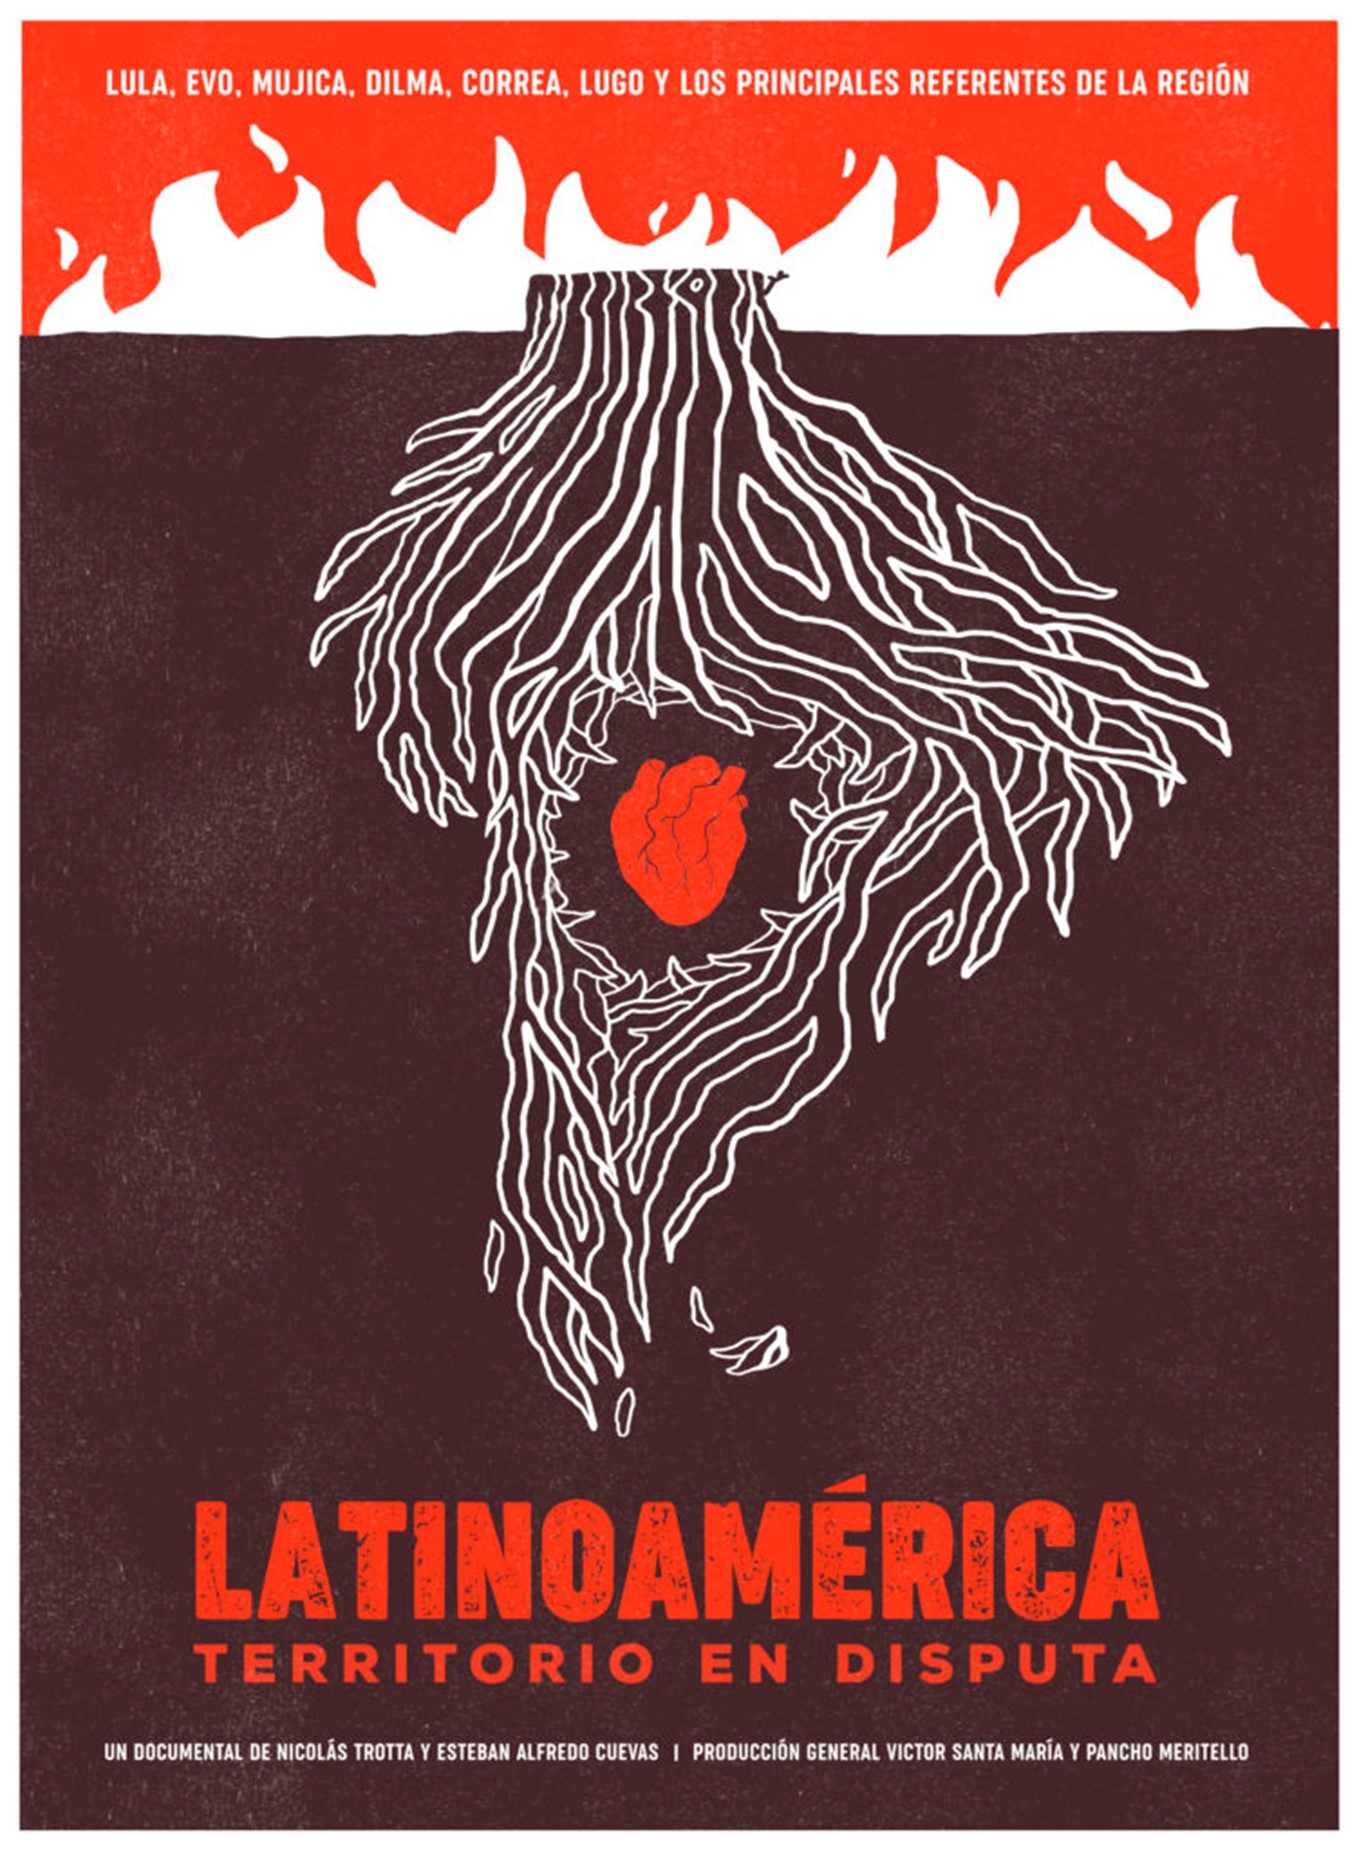 politics of latin america